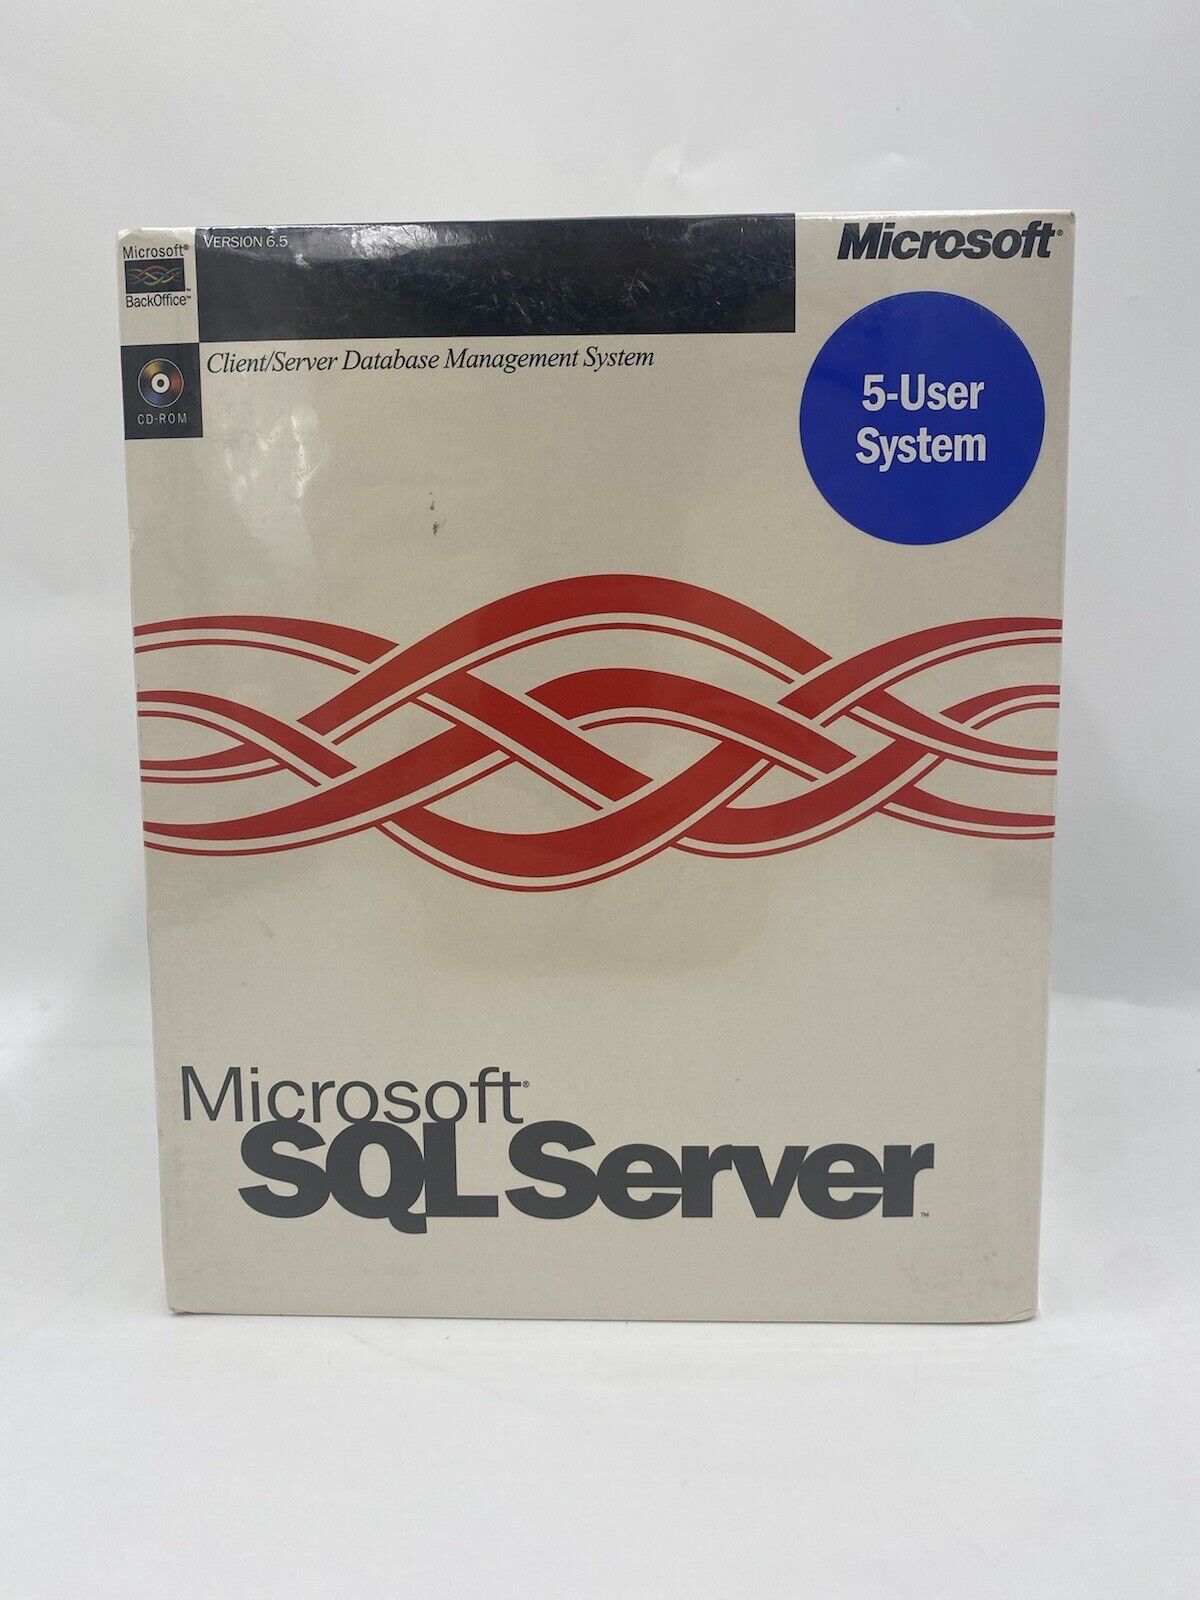 Microsoft SQL Server Version 6.5 - Factory Sealed New - 5 User System, Very Rare